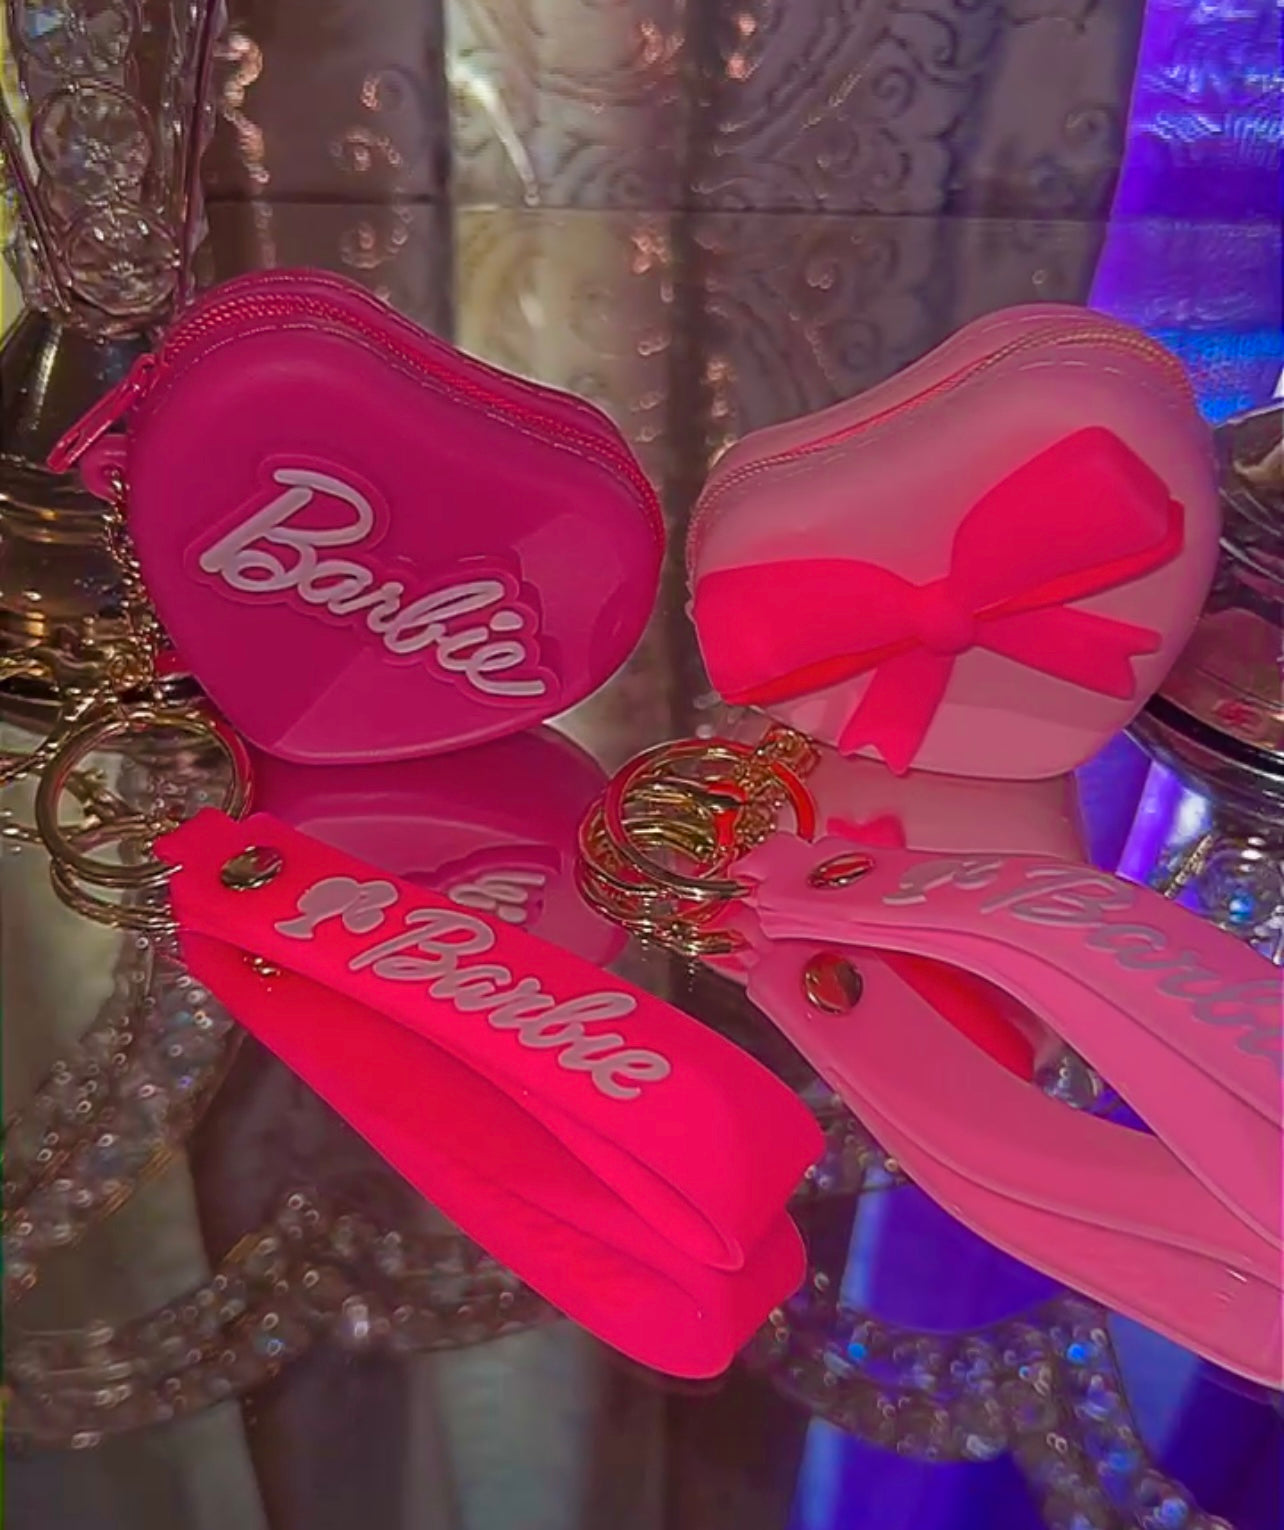 Barbiee Airpod Case